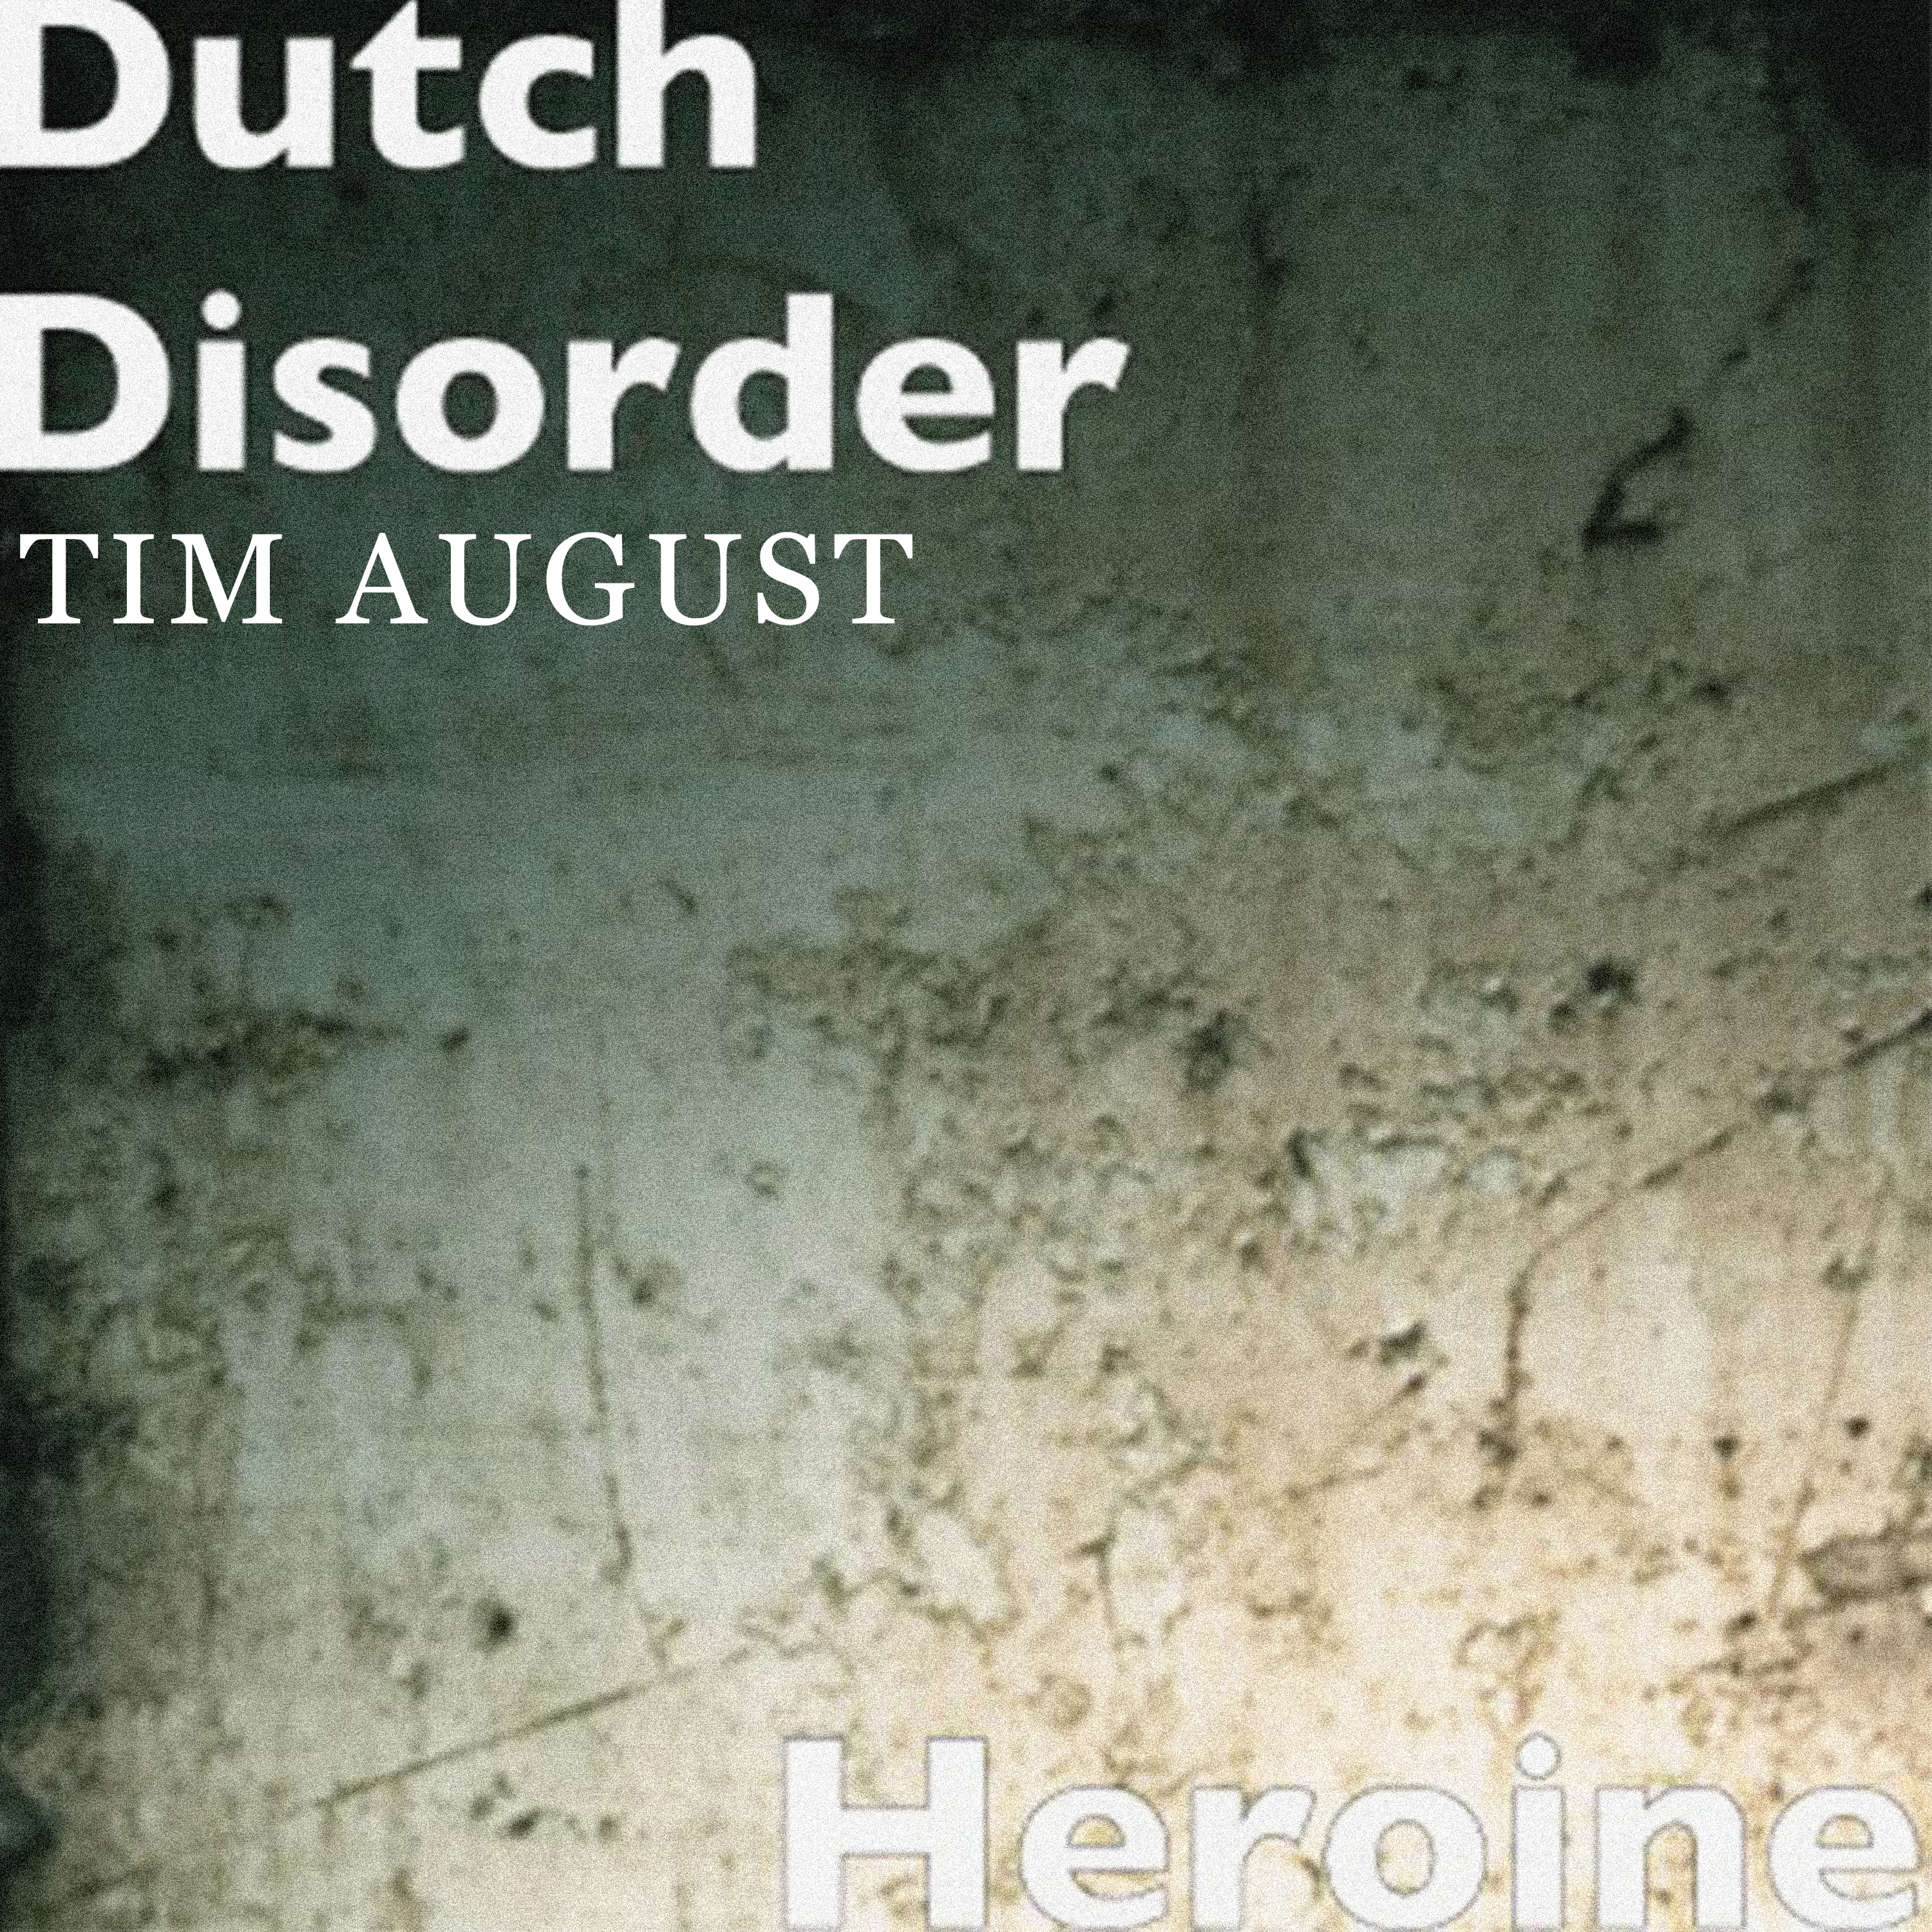 I dont Love. Нано Project. Проект соль обложка альбома. I dont Love you poster. Dutch disorder heroine pat b remix